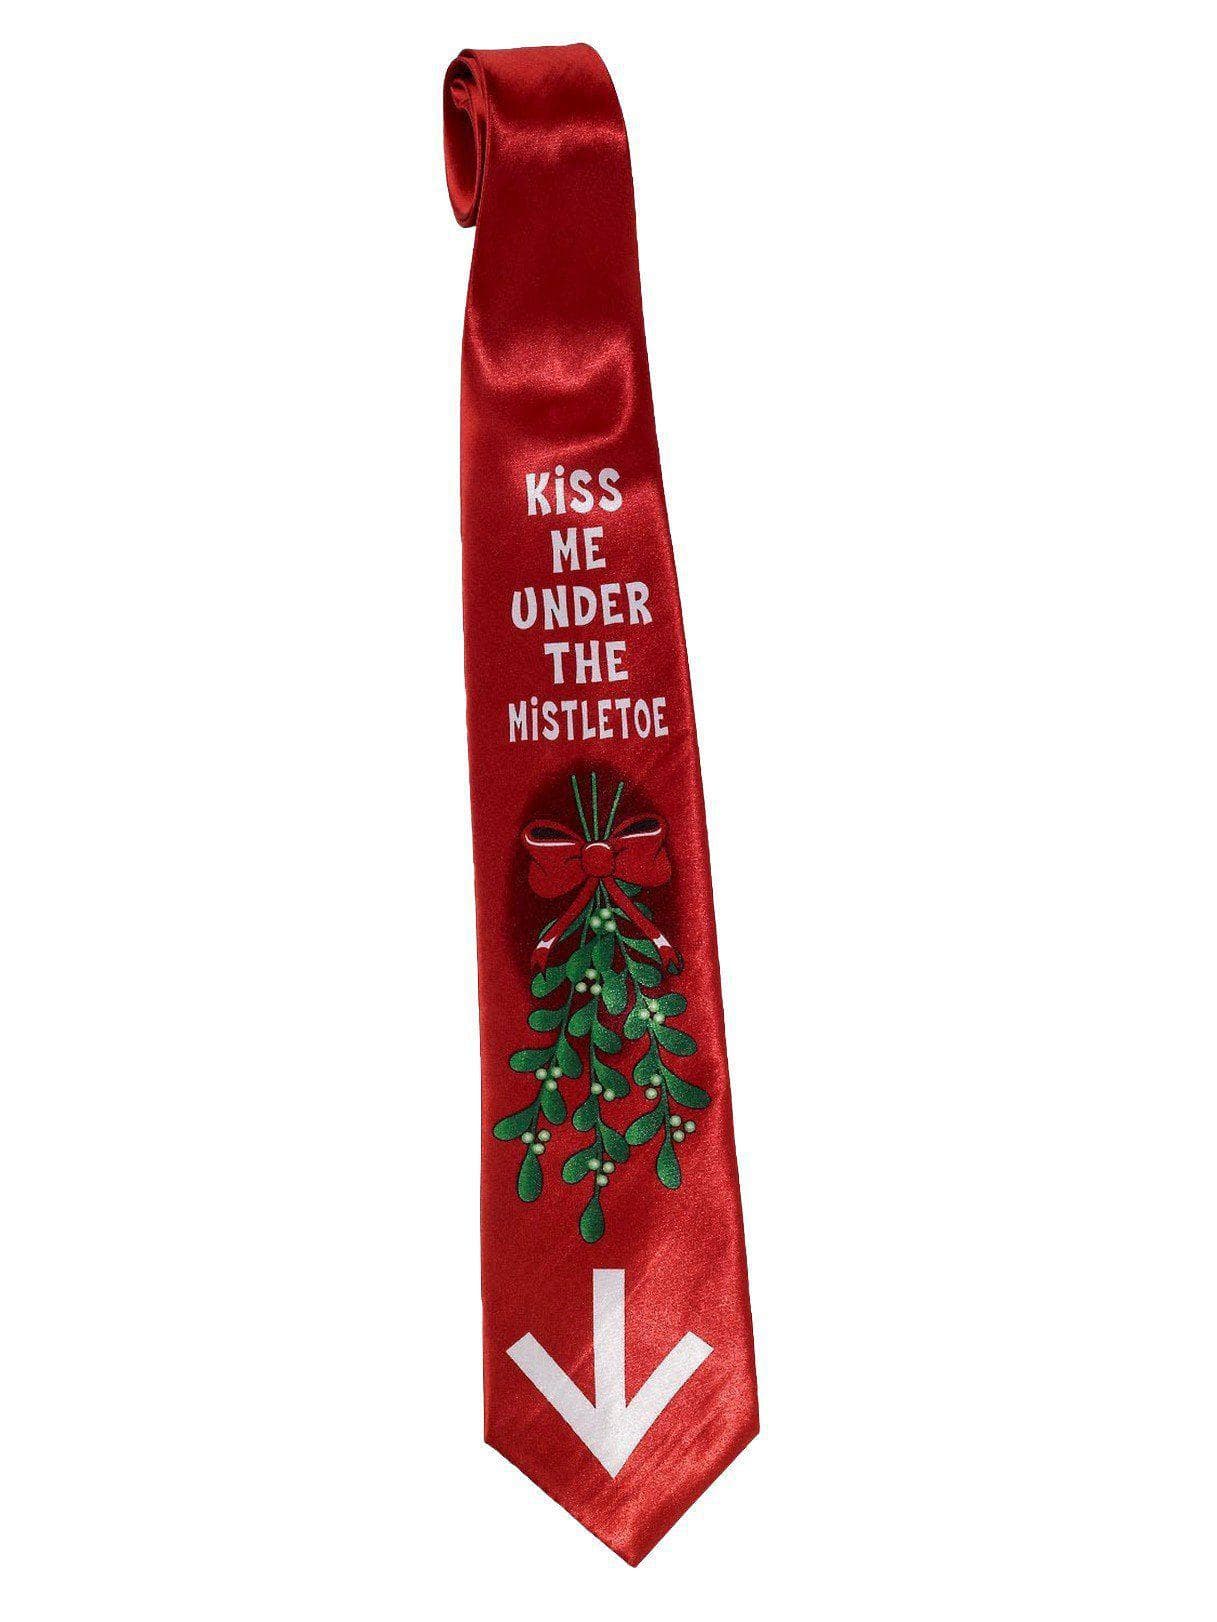 Mistletoe Christmas Tie - costumes.com